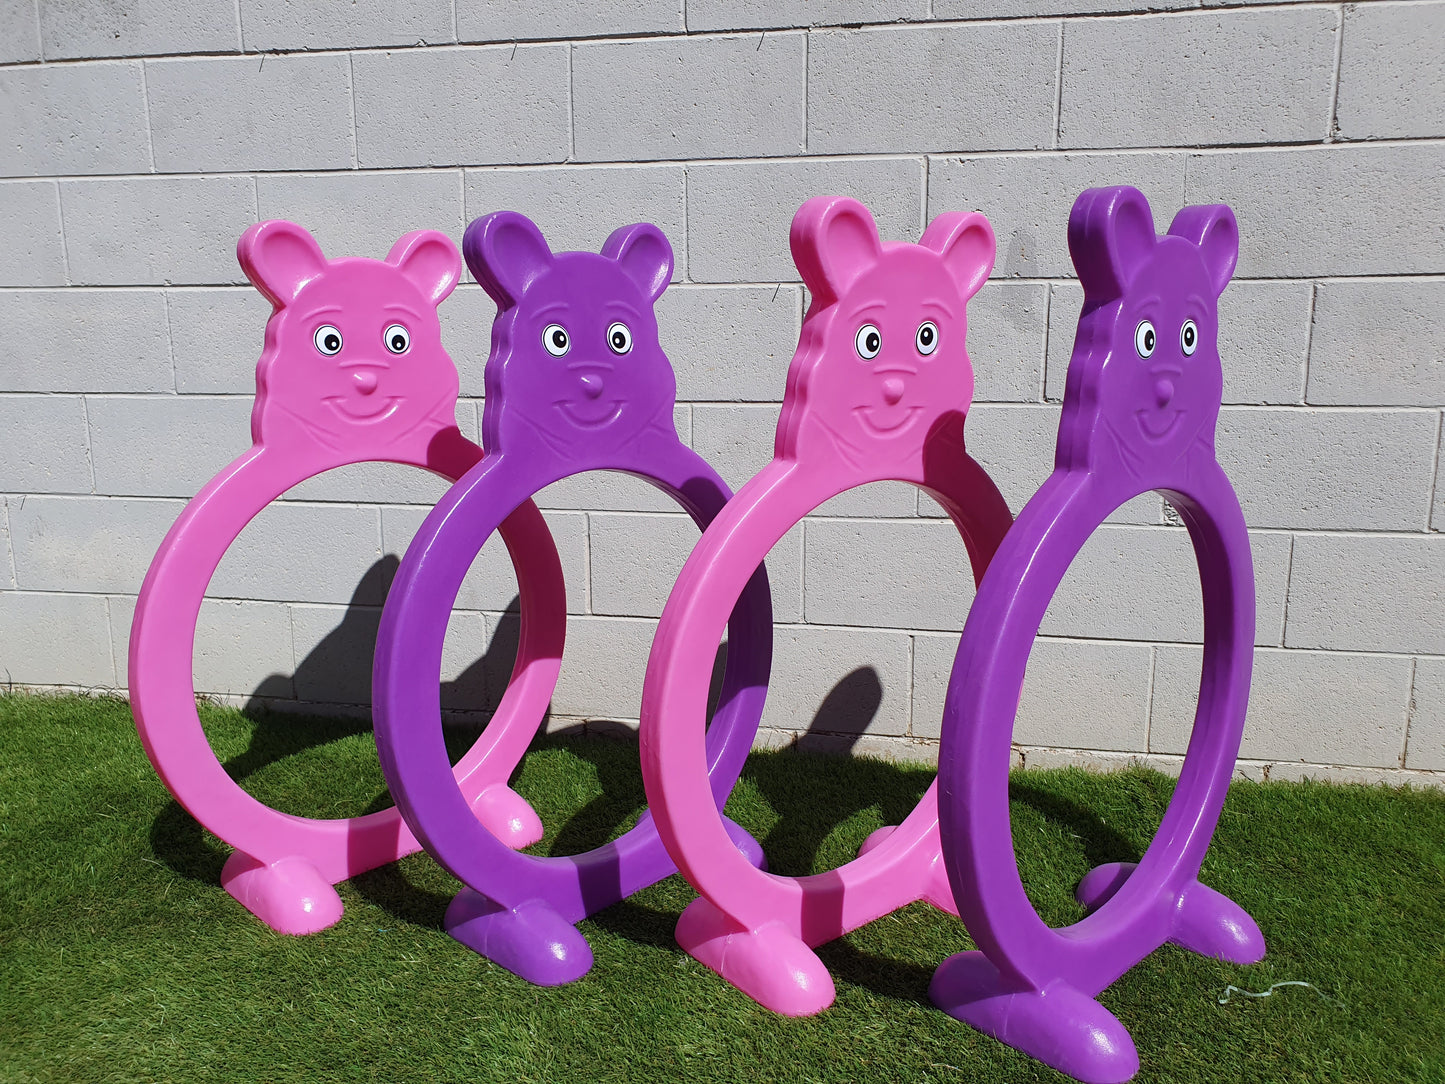 Bear Circle Toys - Pink and Purple, South Brisbane